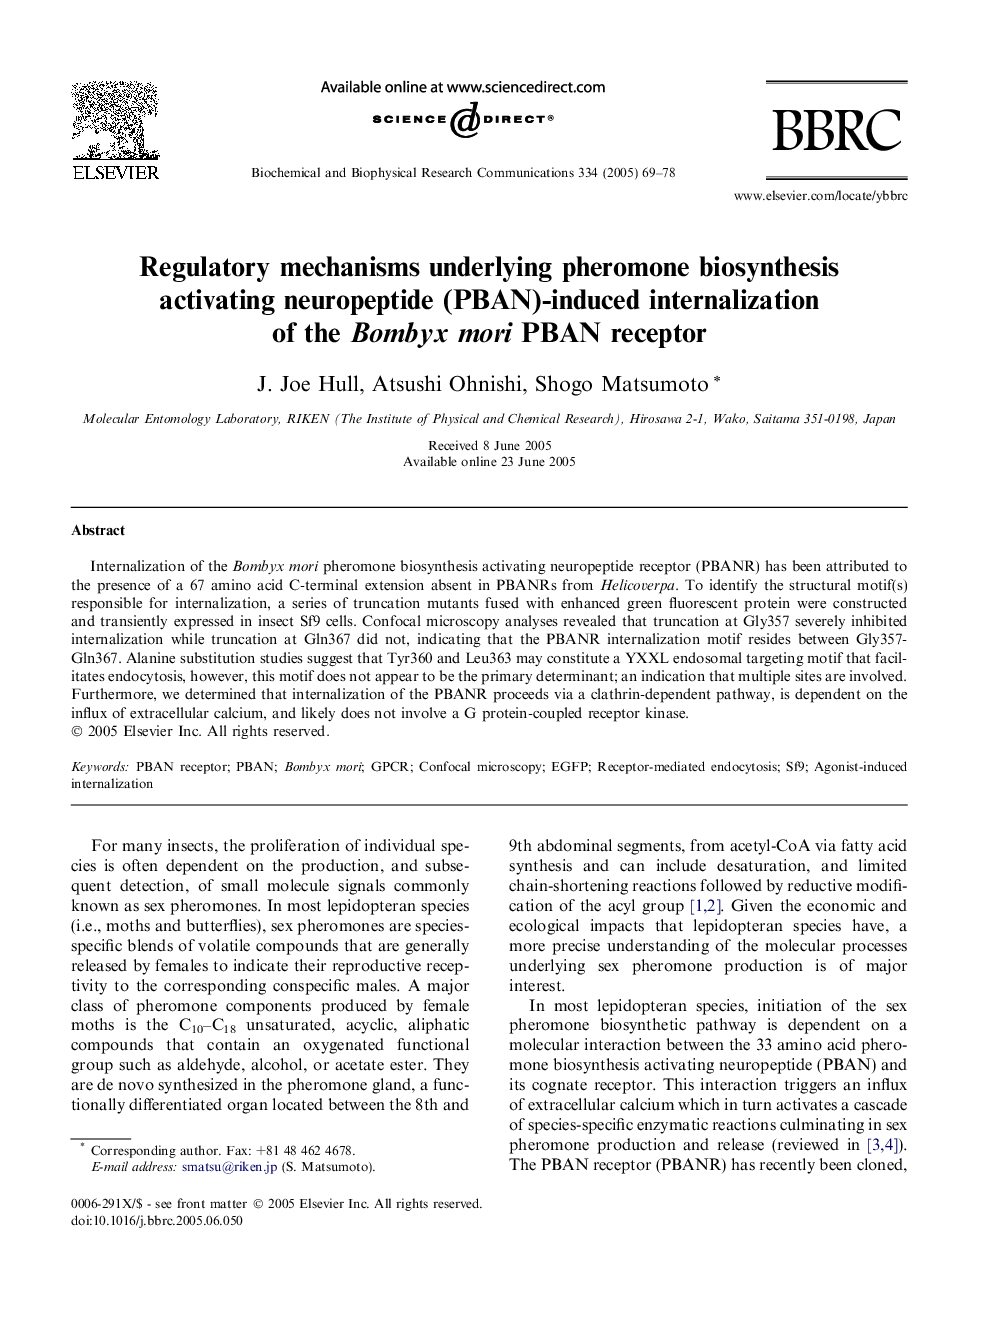 Regulatory mechanisms underlying pheromone biosynthesis activating neuropeptide (PBAN)-induced internalization of the Bombyx mori PBAN receptor